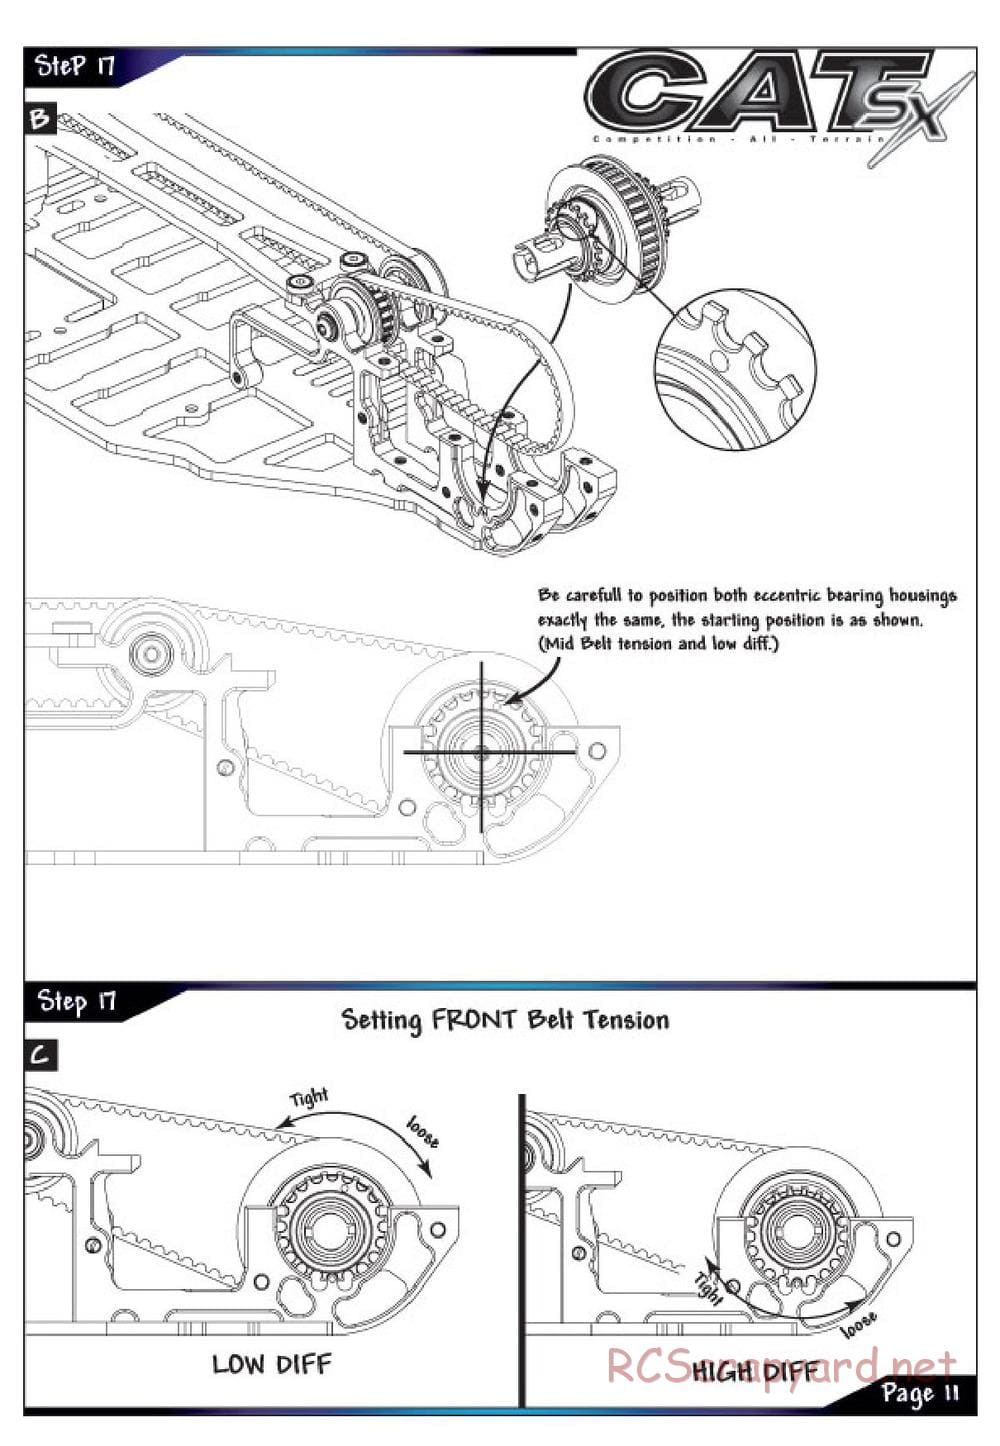 Schumacher - Cat SX - Manual - Page 4